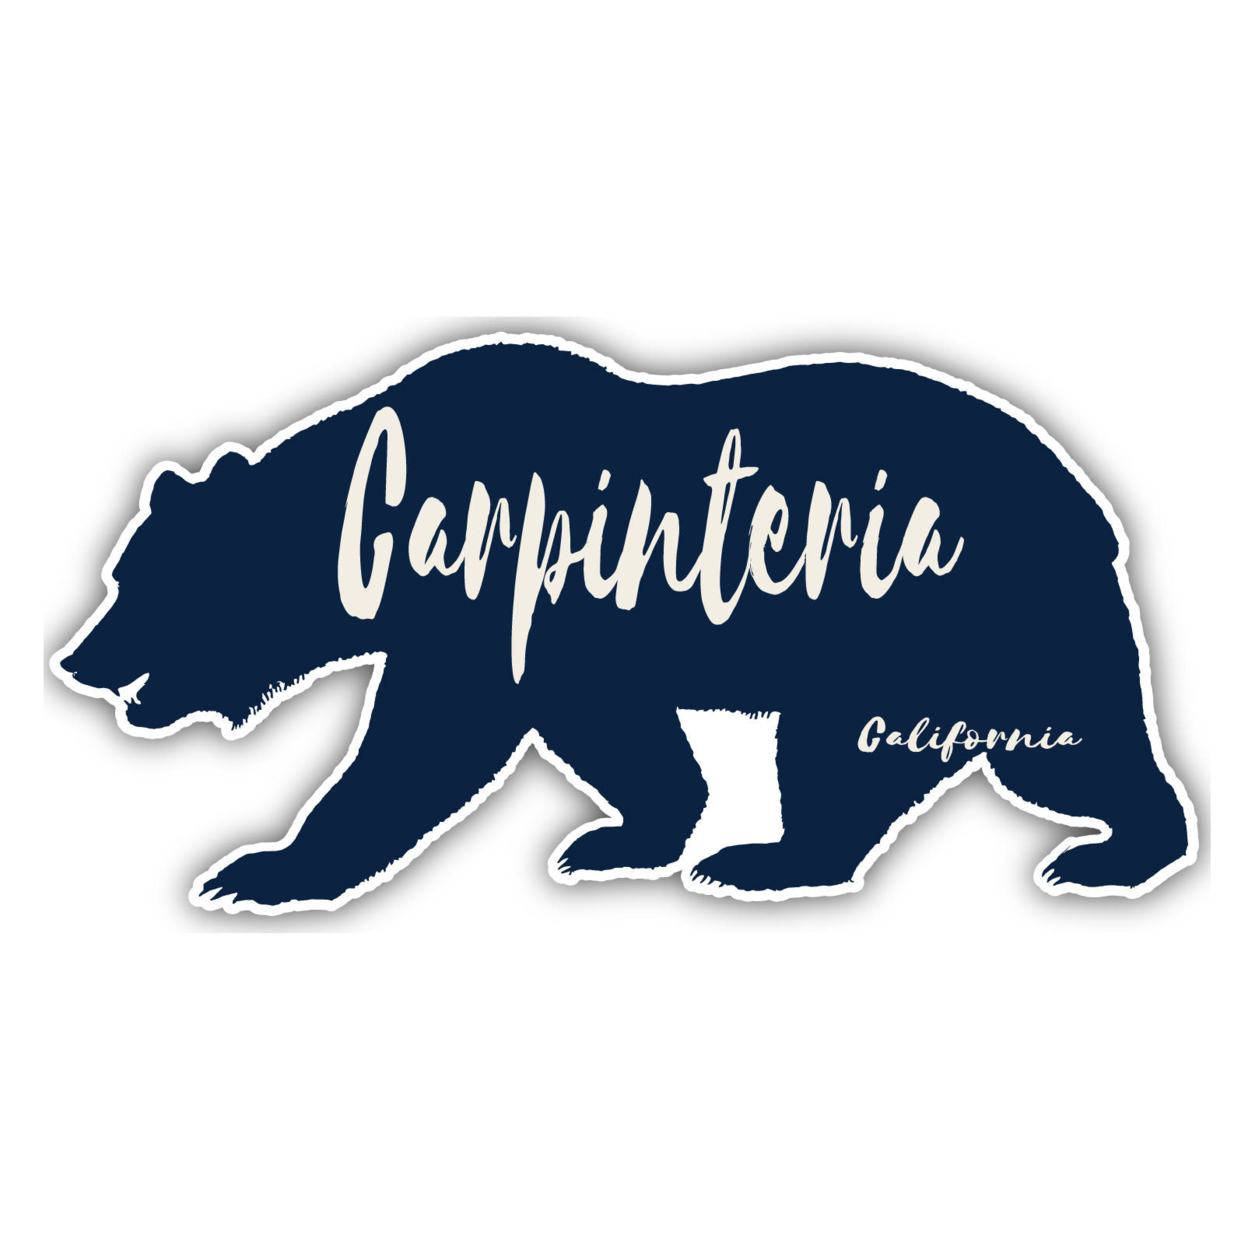 Carpinteria California Souvenir Decorative Stickers (Choose Theme And Size) - 4-Pack, 10-Inch, Bear